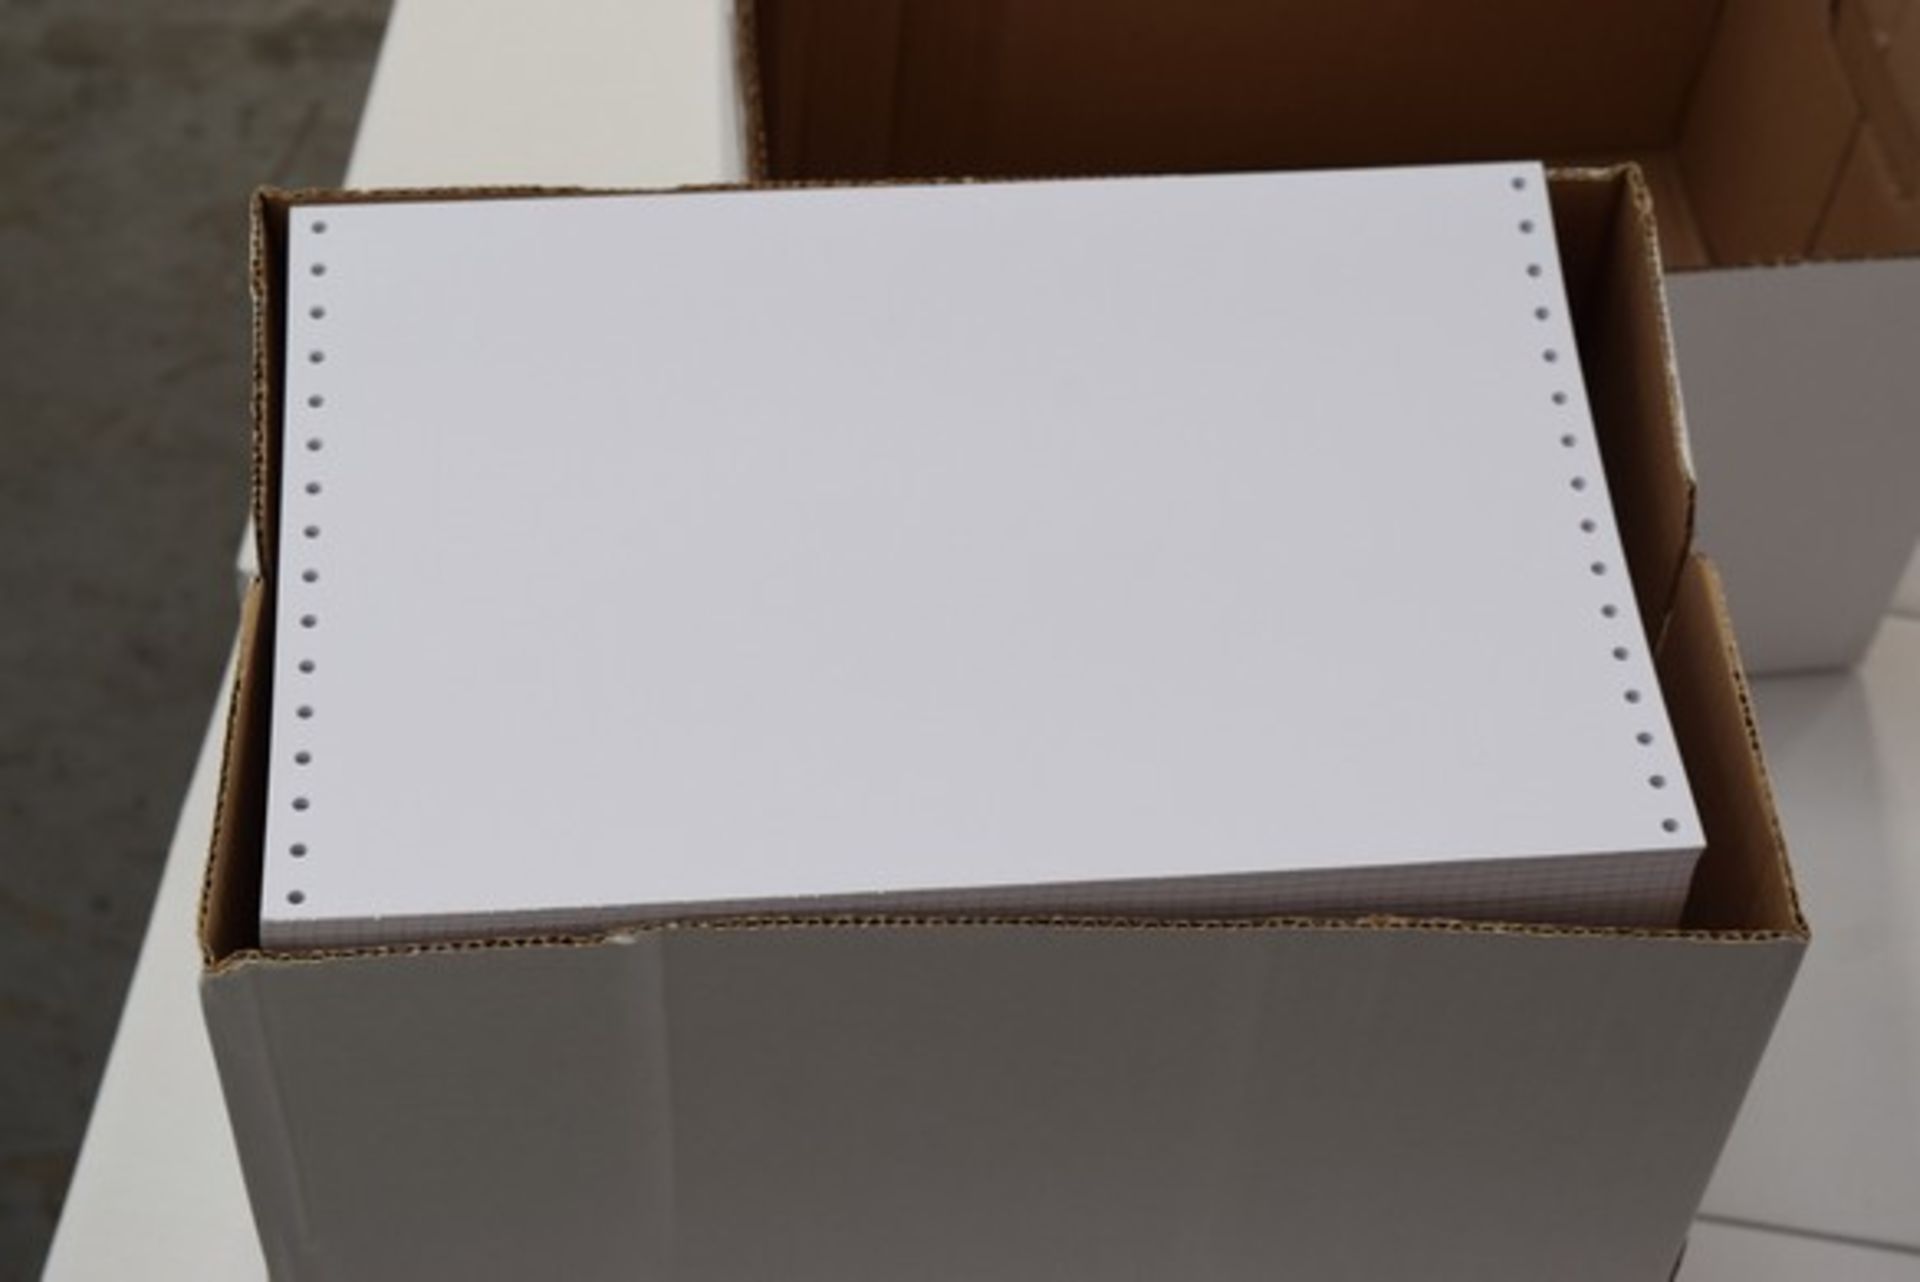 2 x BOXES OF TOP LIST 8 X 305MM PLAIN COMPUTER LISTING PAPER RRP £5 A BOX 10.08.17 (P41) *PLEASE